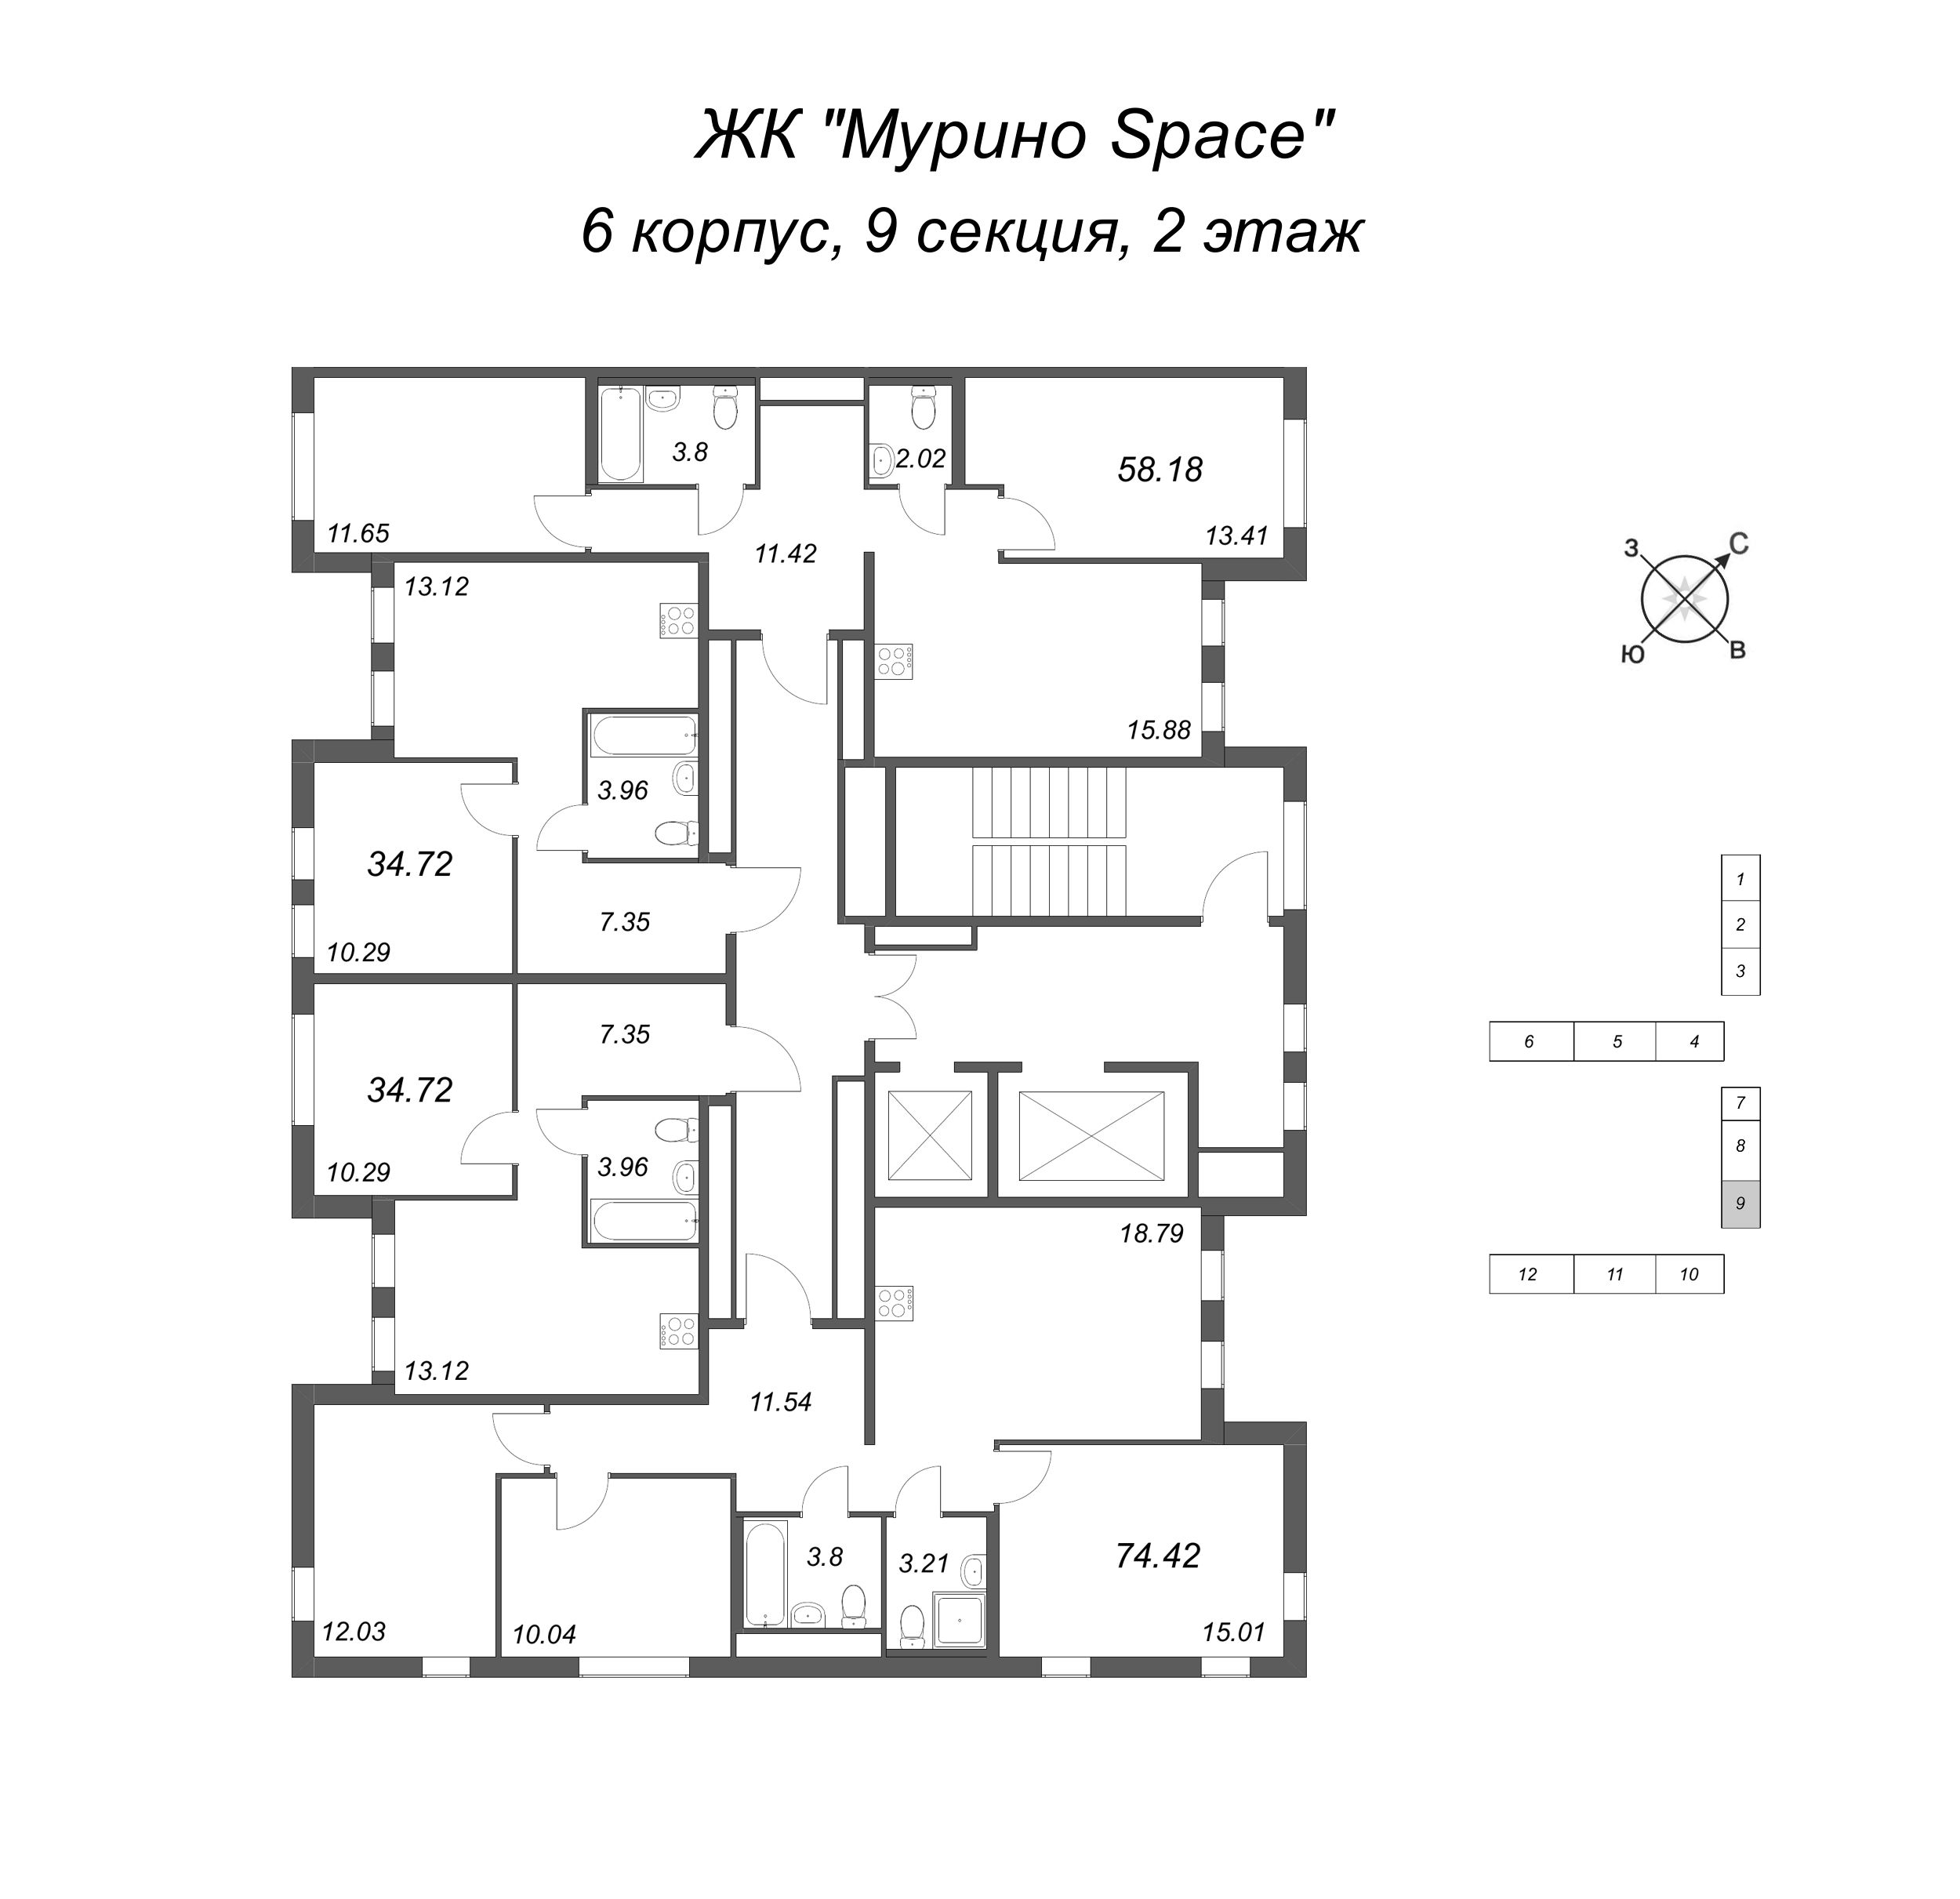 3-комнатная (Евро) квартира, 58.18 м² в ЖК "Мурино Space" - планировка этажа